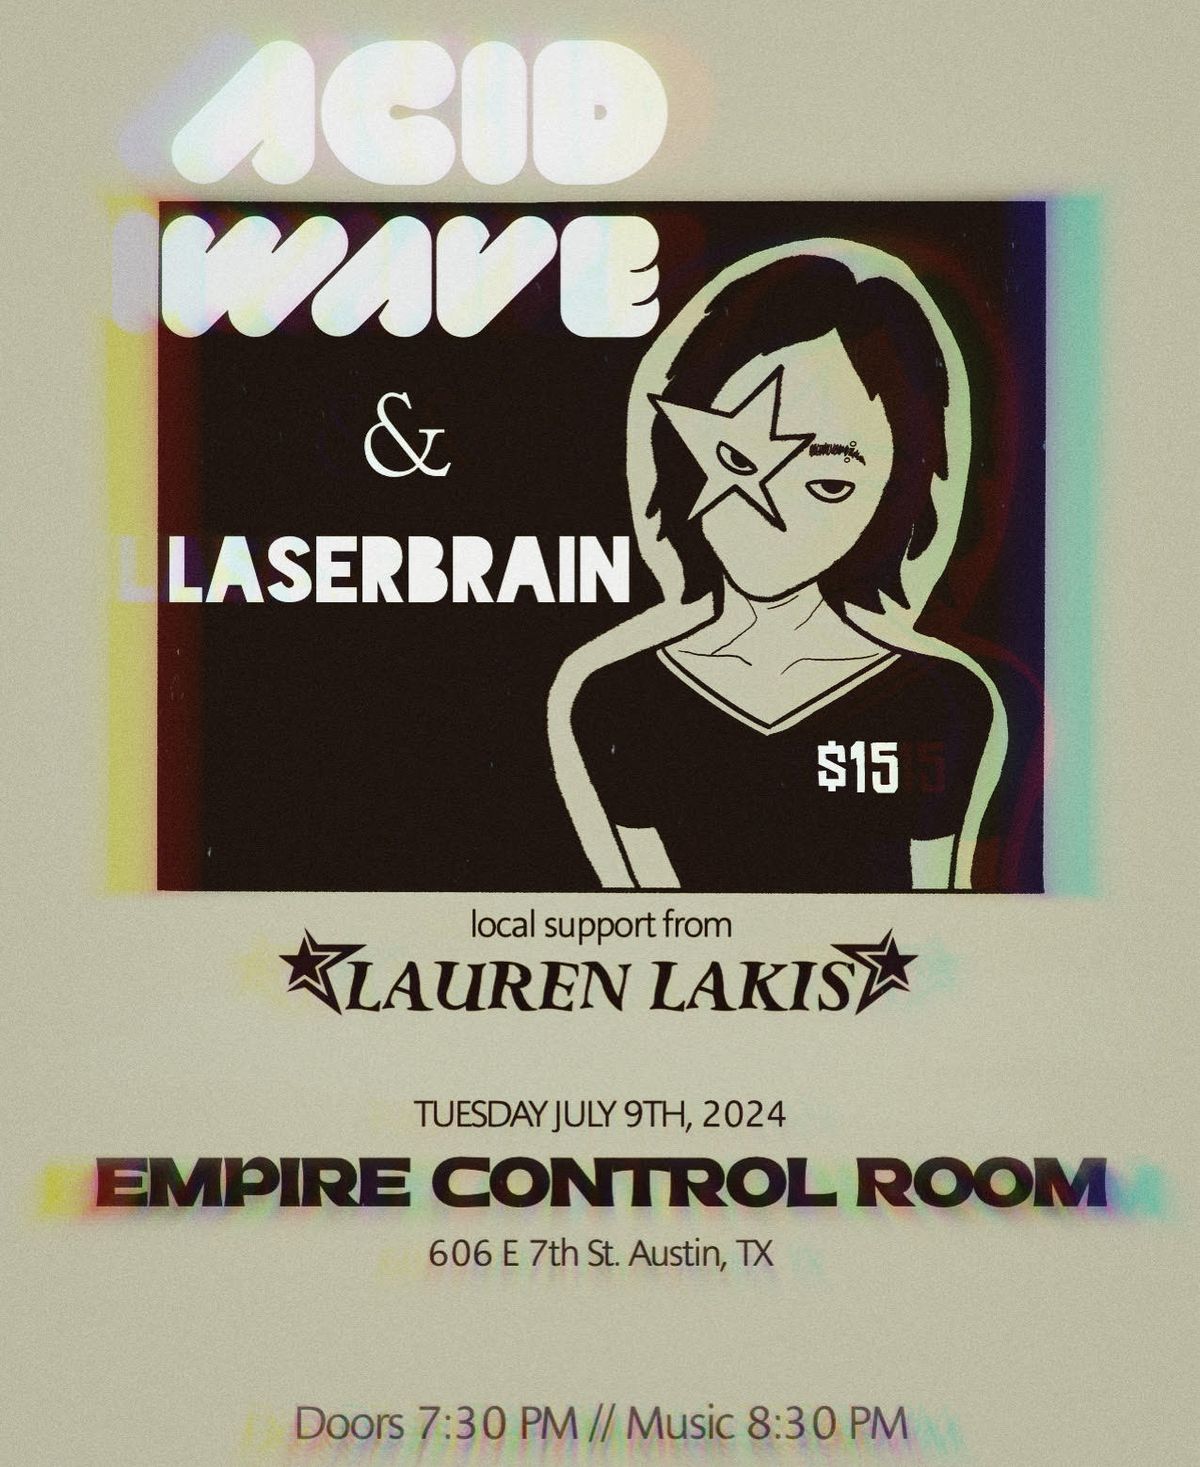 Empire Presents: Acid Wave w\/ Laserbrain, Lauren Lakis in the Control Room